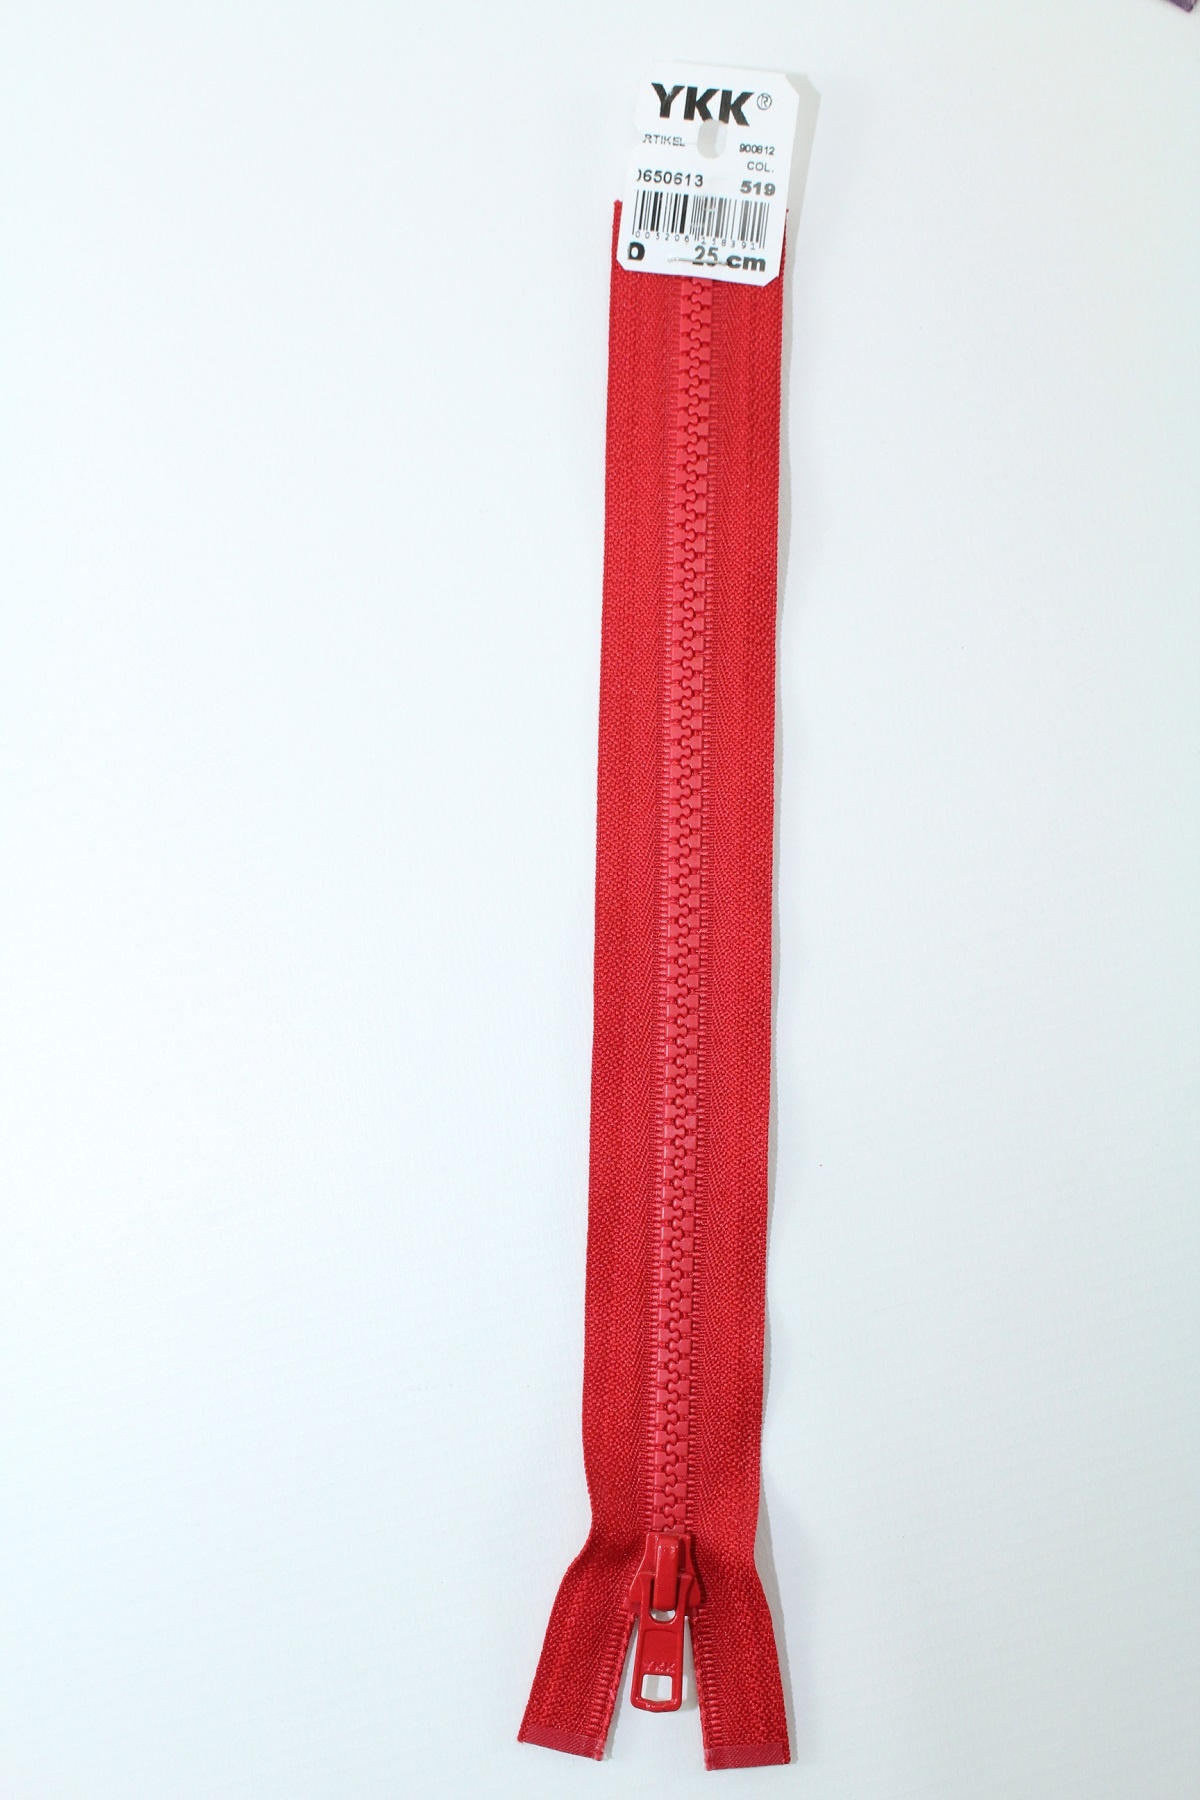 YKK - Reissverschlüsse 25 cm - 80 cm, teilbar, dunkelrot